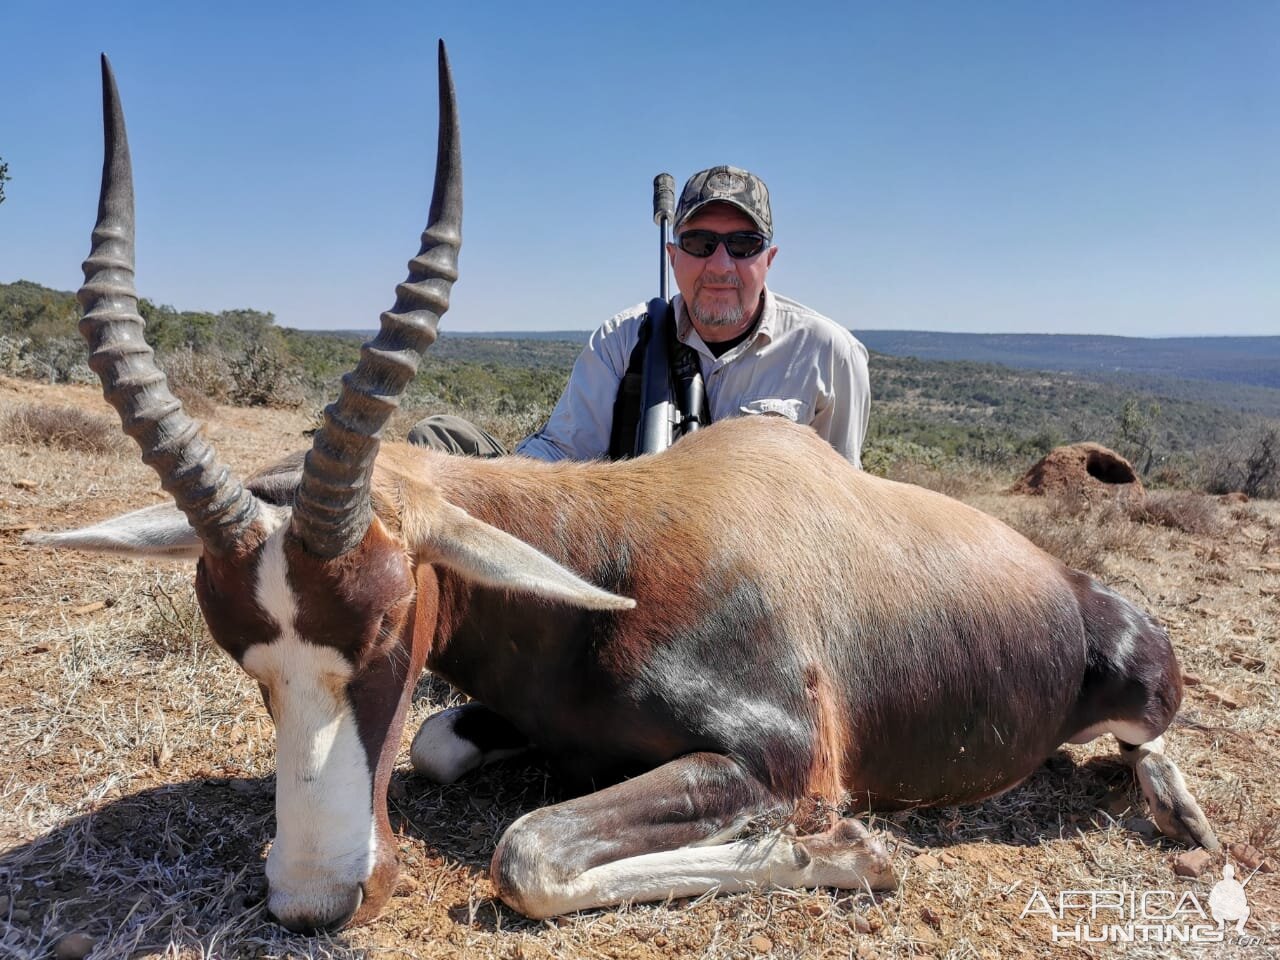 Hunt Blesbok in South Africa